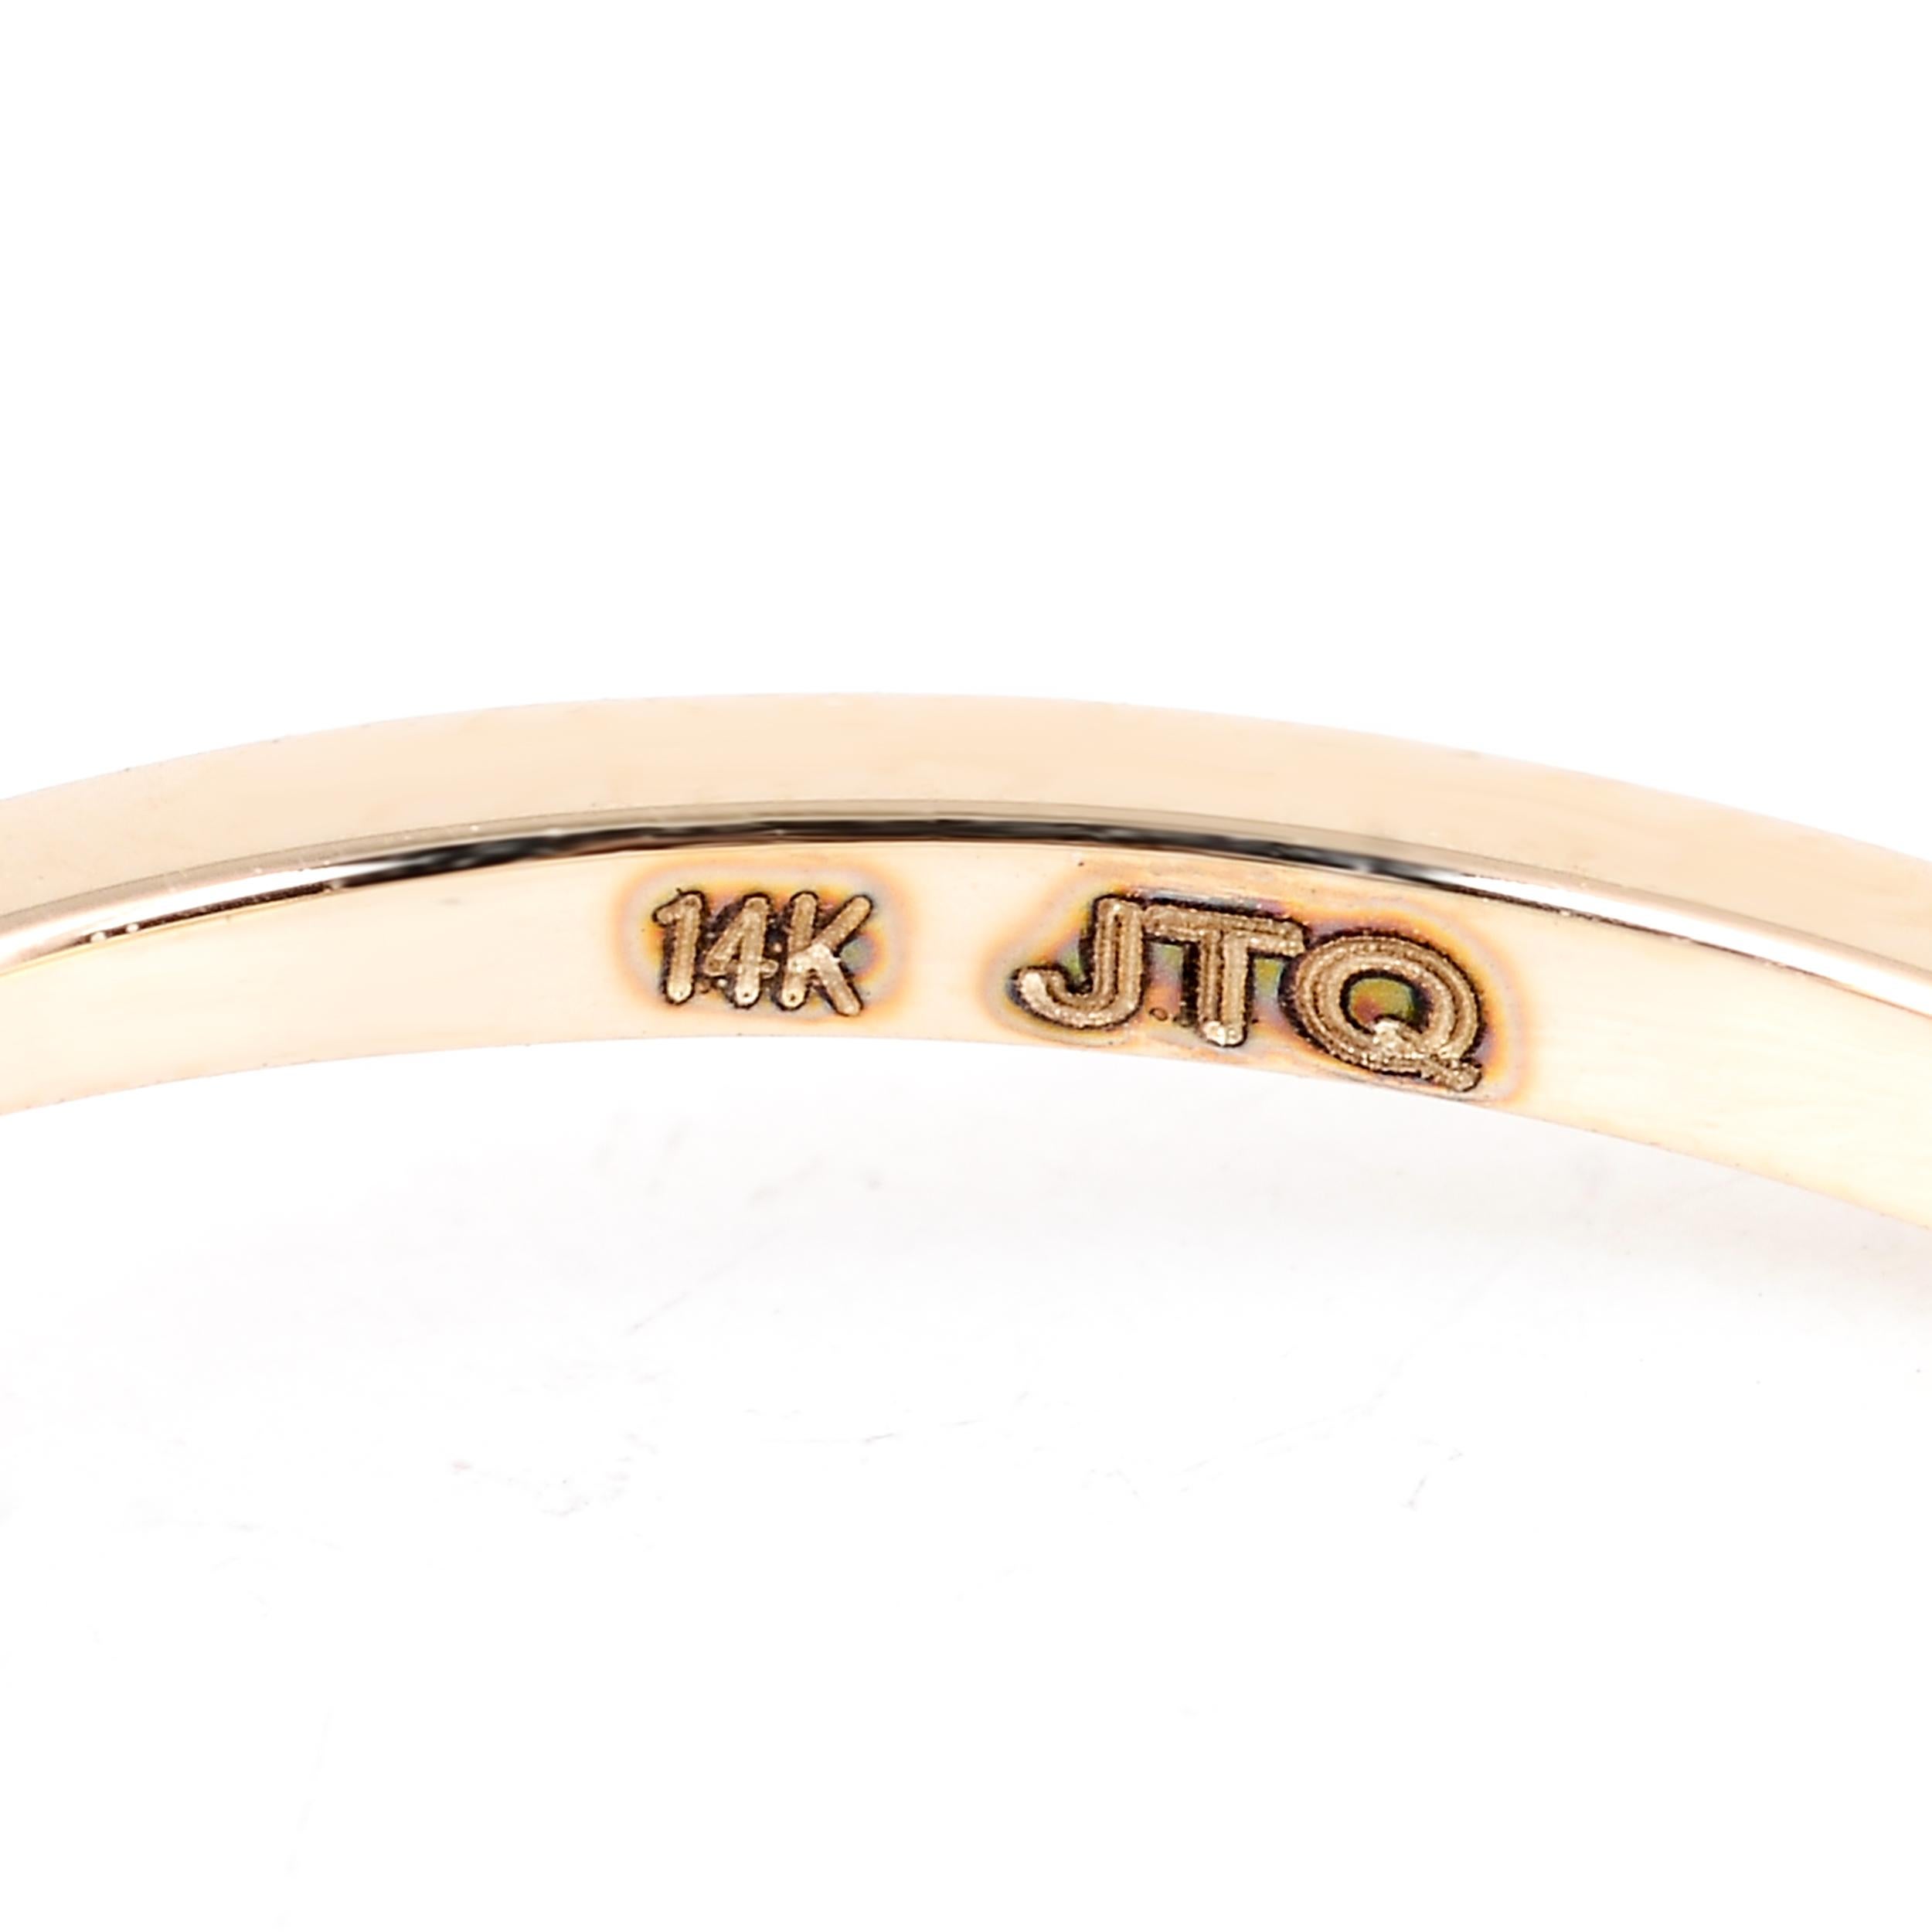 Elegant 14K Tourmaline Cocktail Ring, Size 7 - Stunning Statement Jewelry Piece For Sale 2